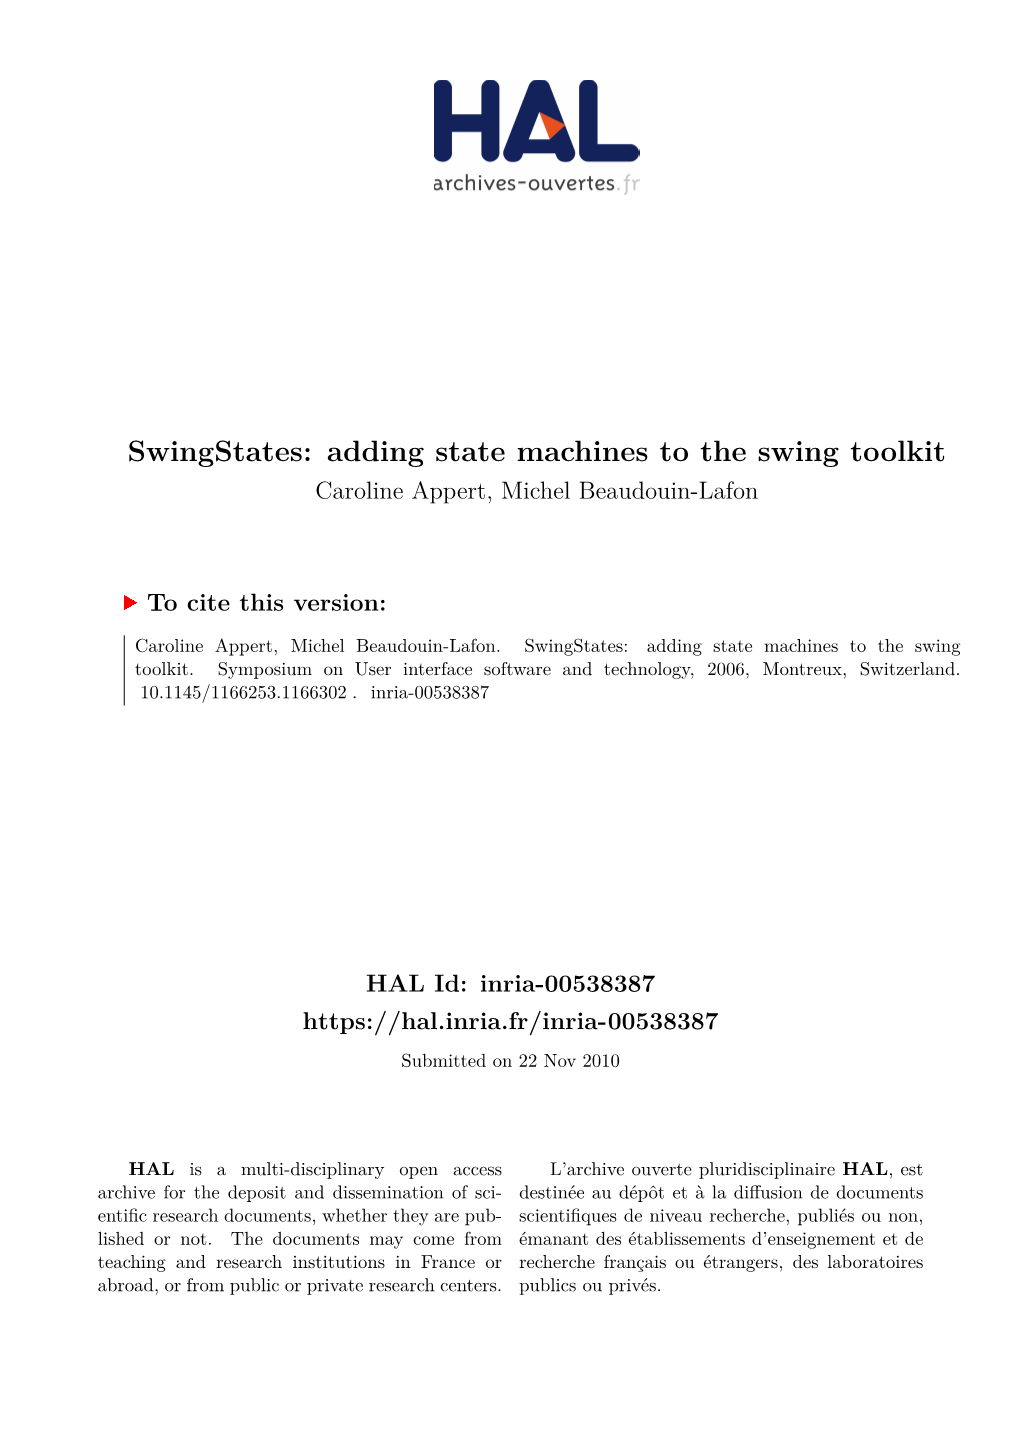 Swingstates: Adding State Machines to the Swing Toolkit Caroline Appert, Michel Beaudouin-Lafon